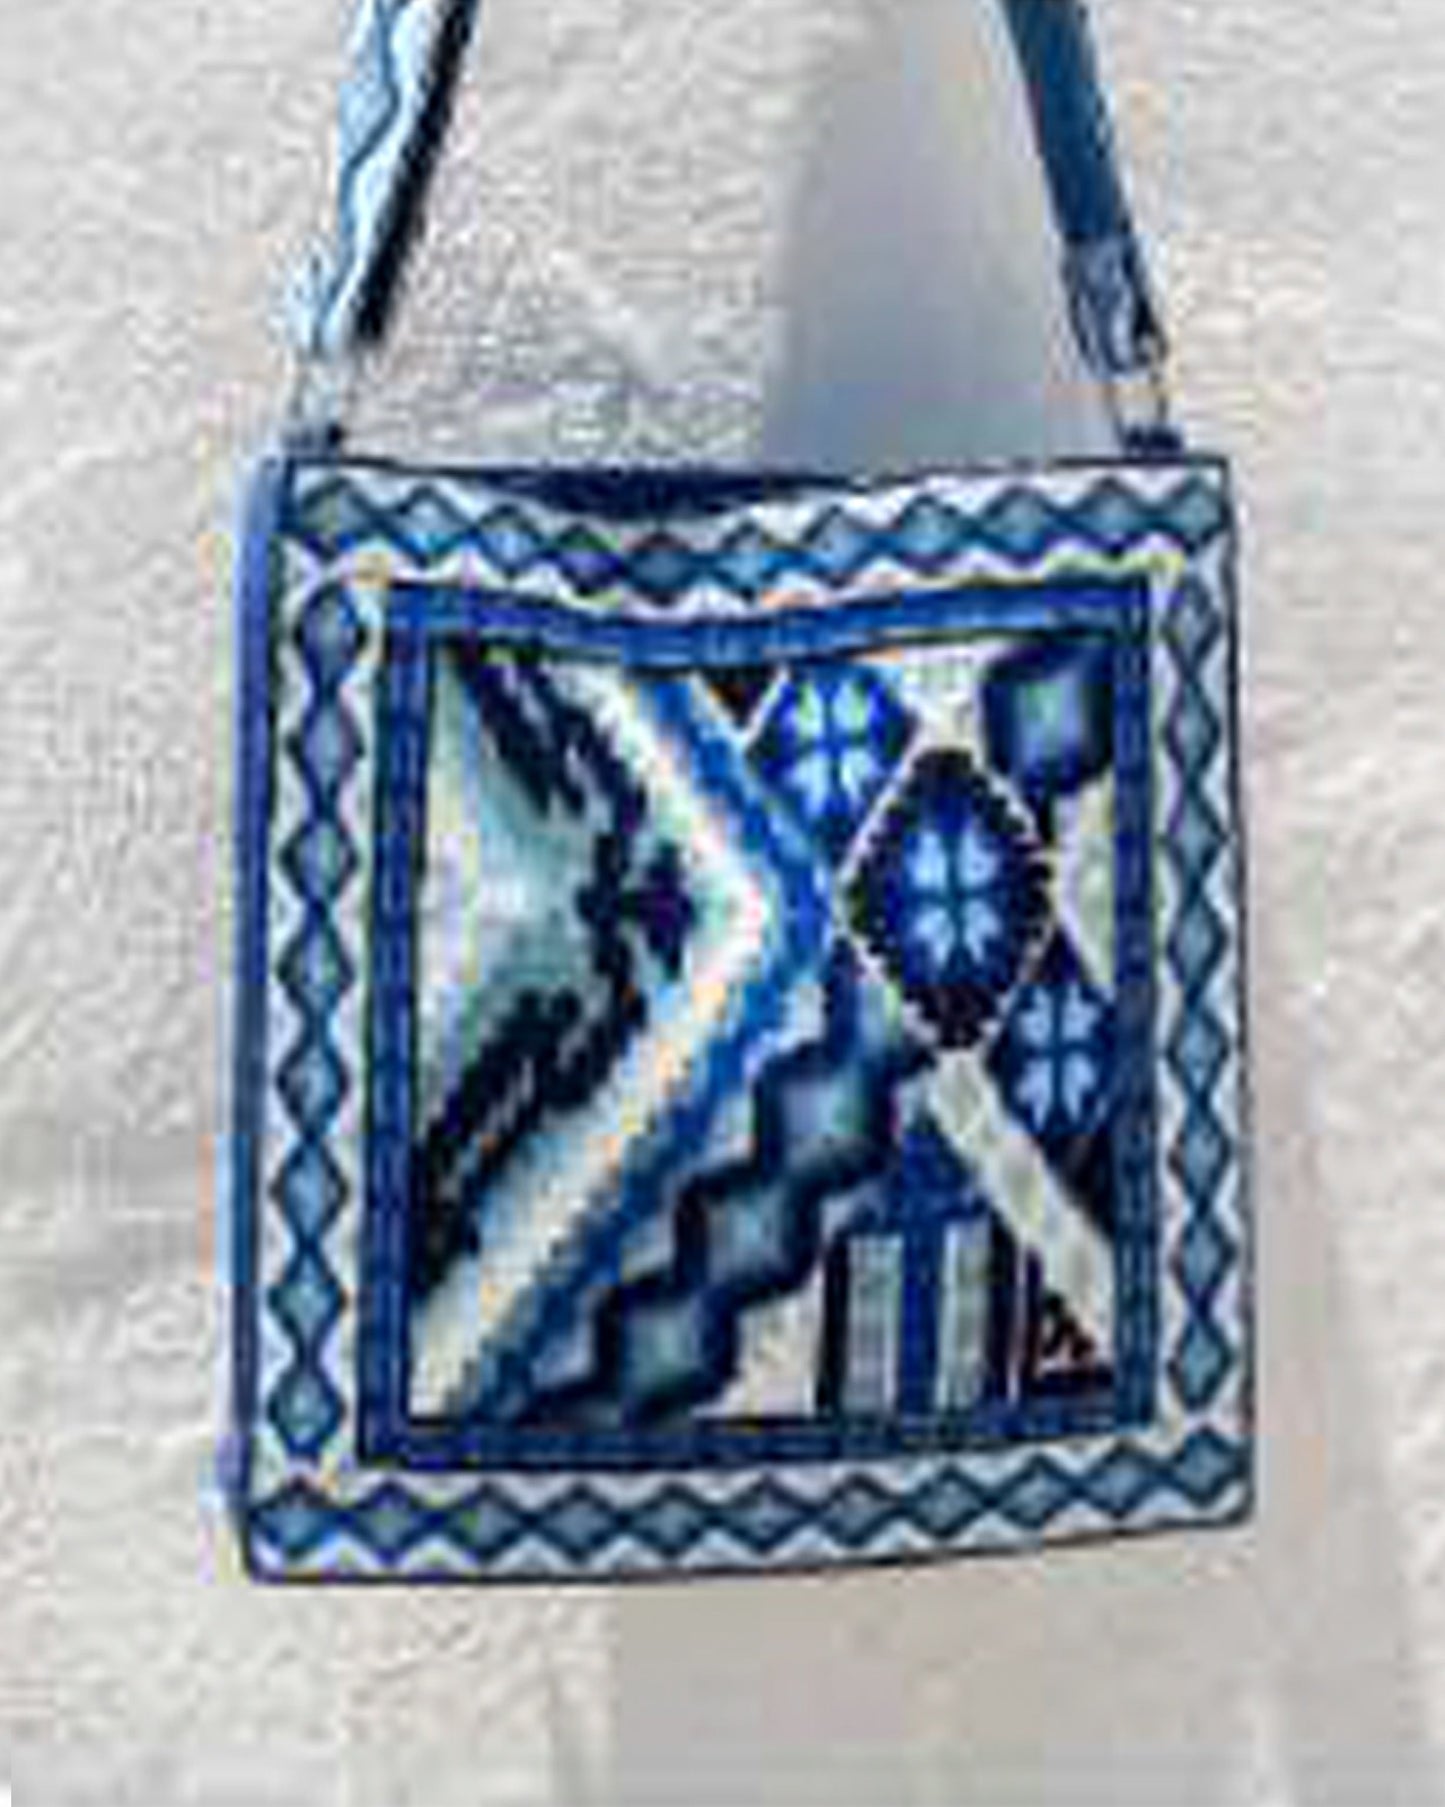 The Messenger Bag - Premium Bag from Marina St Barth - Just $495! Shop now at Marina St Barth